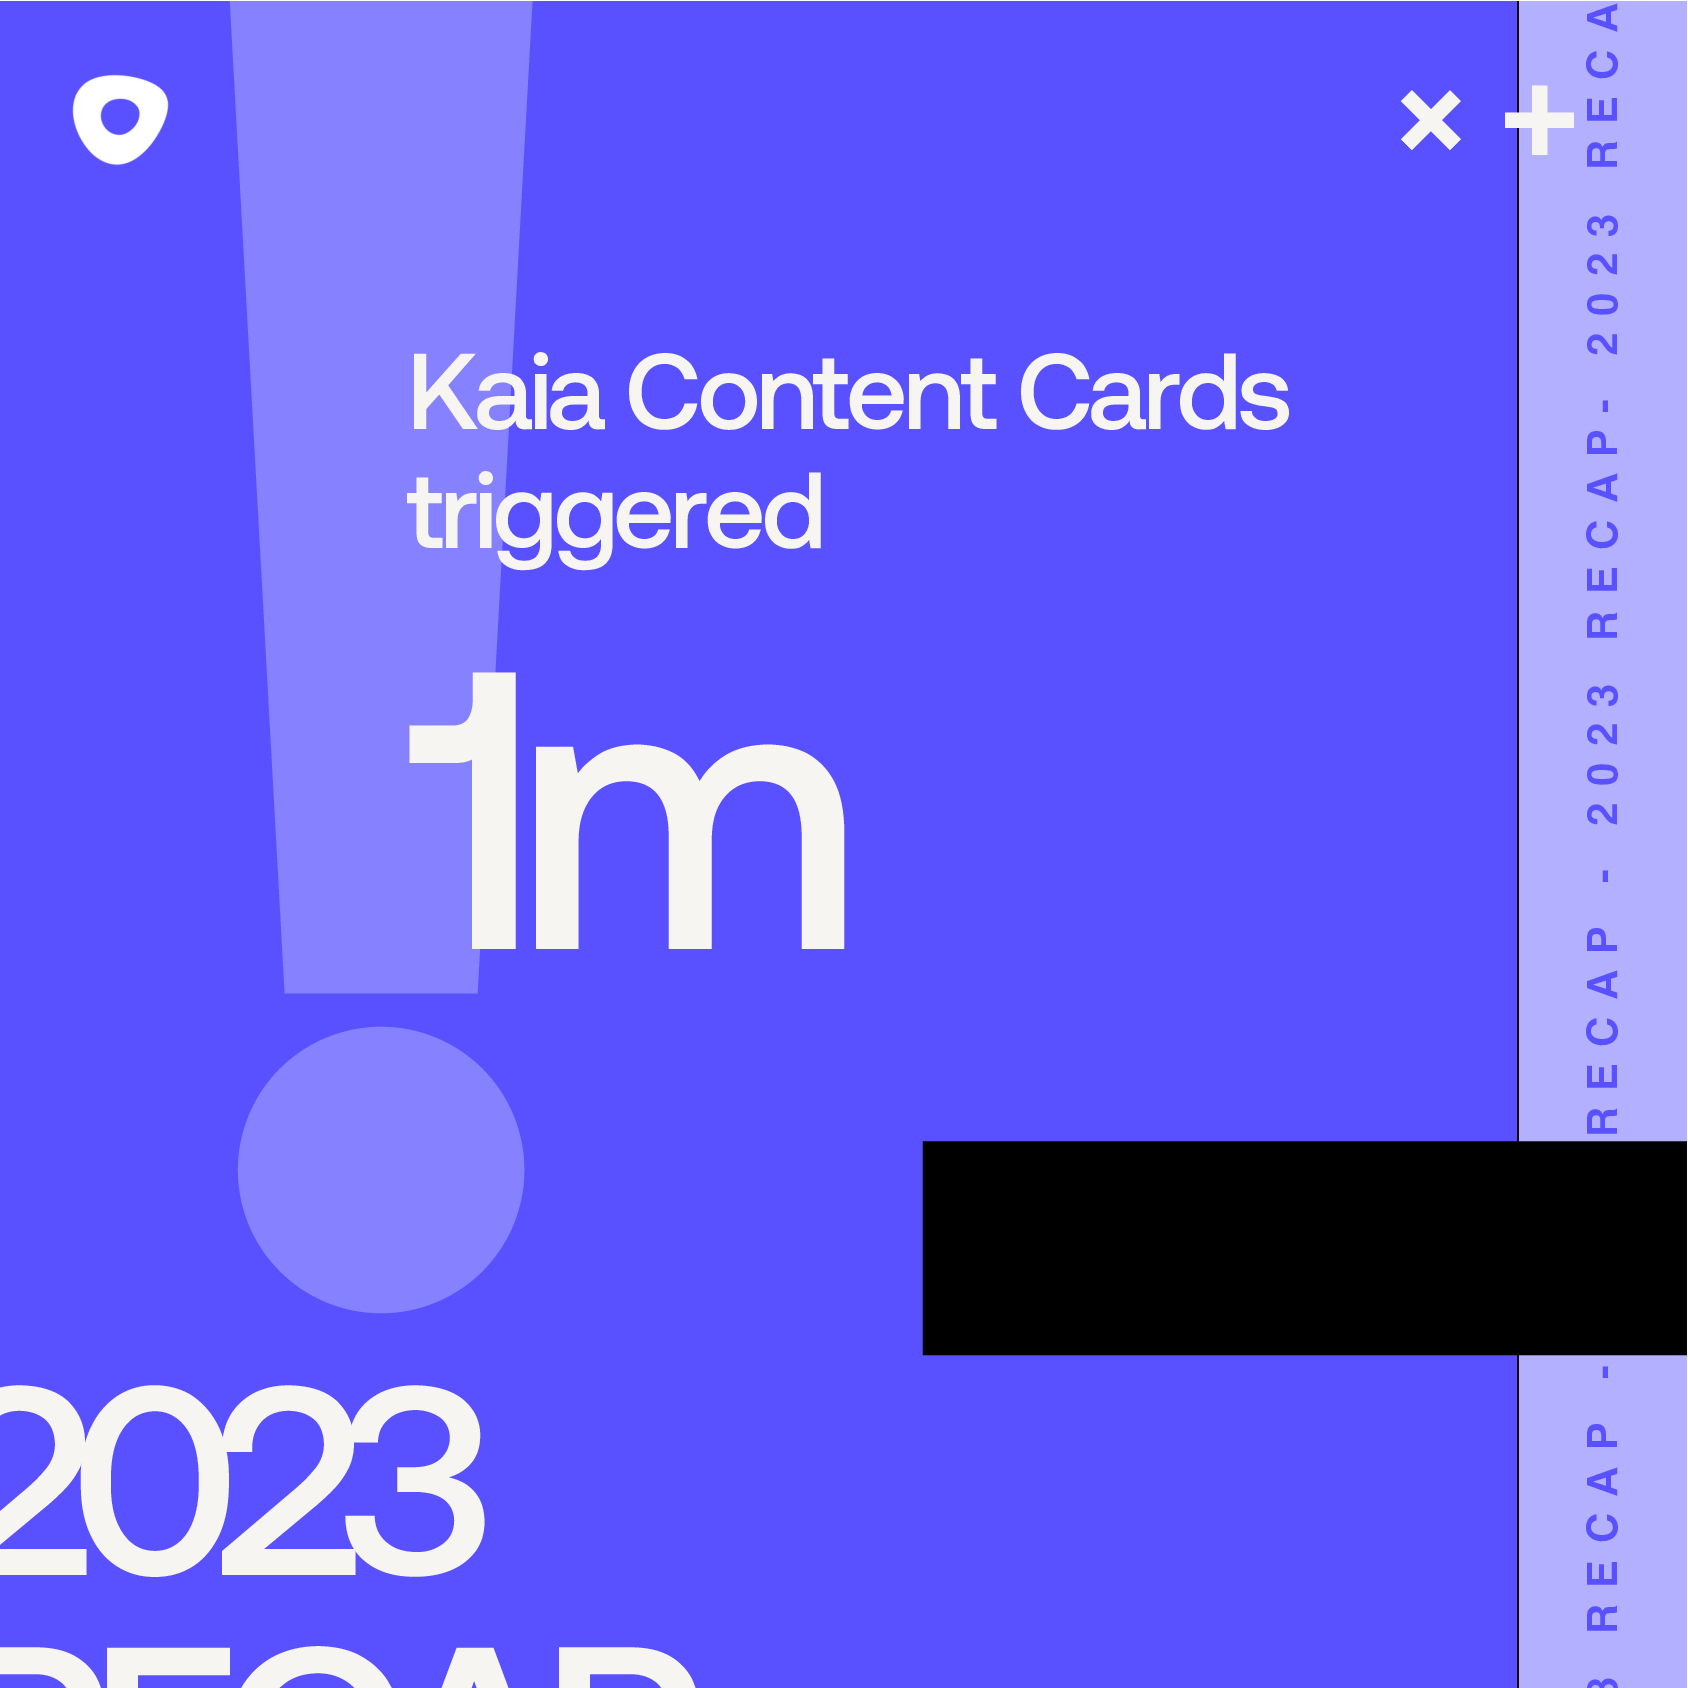 Outreach 2023 recap 1 million Kaia content cards triggered